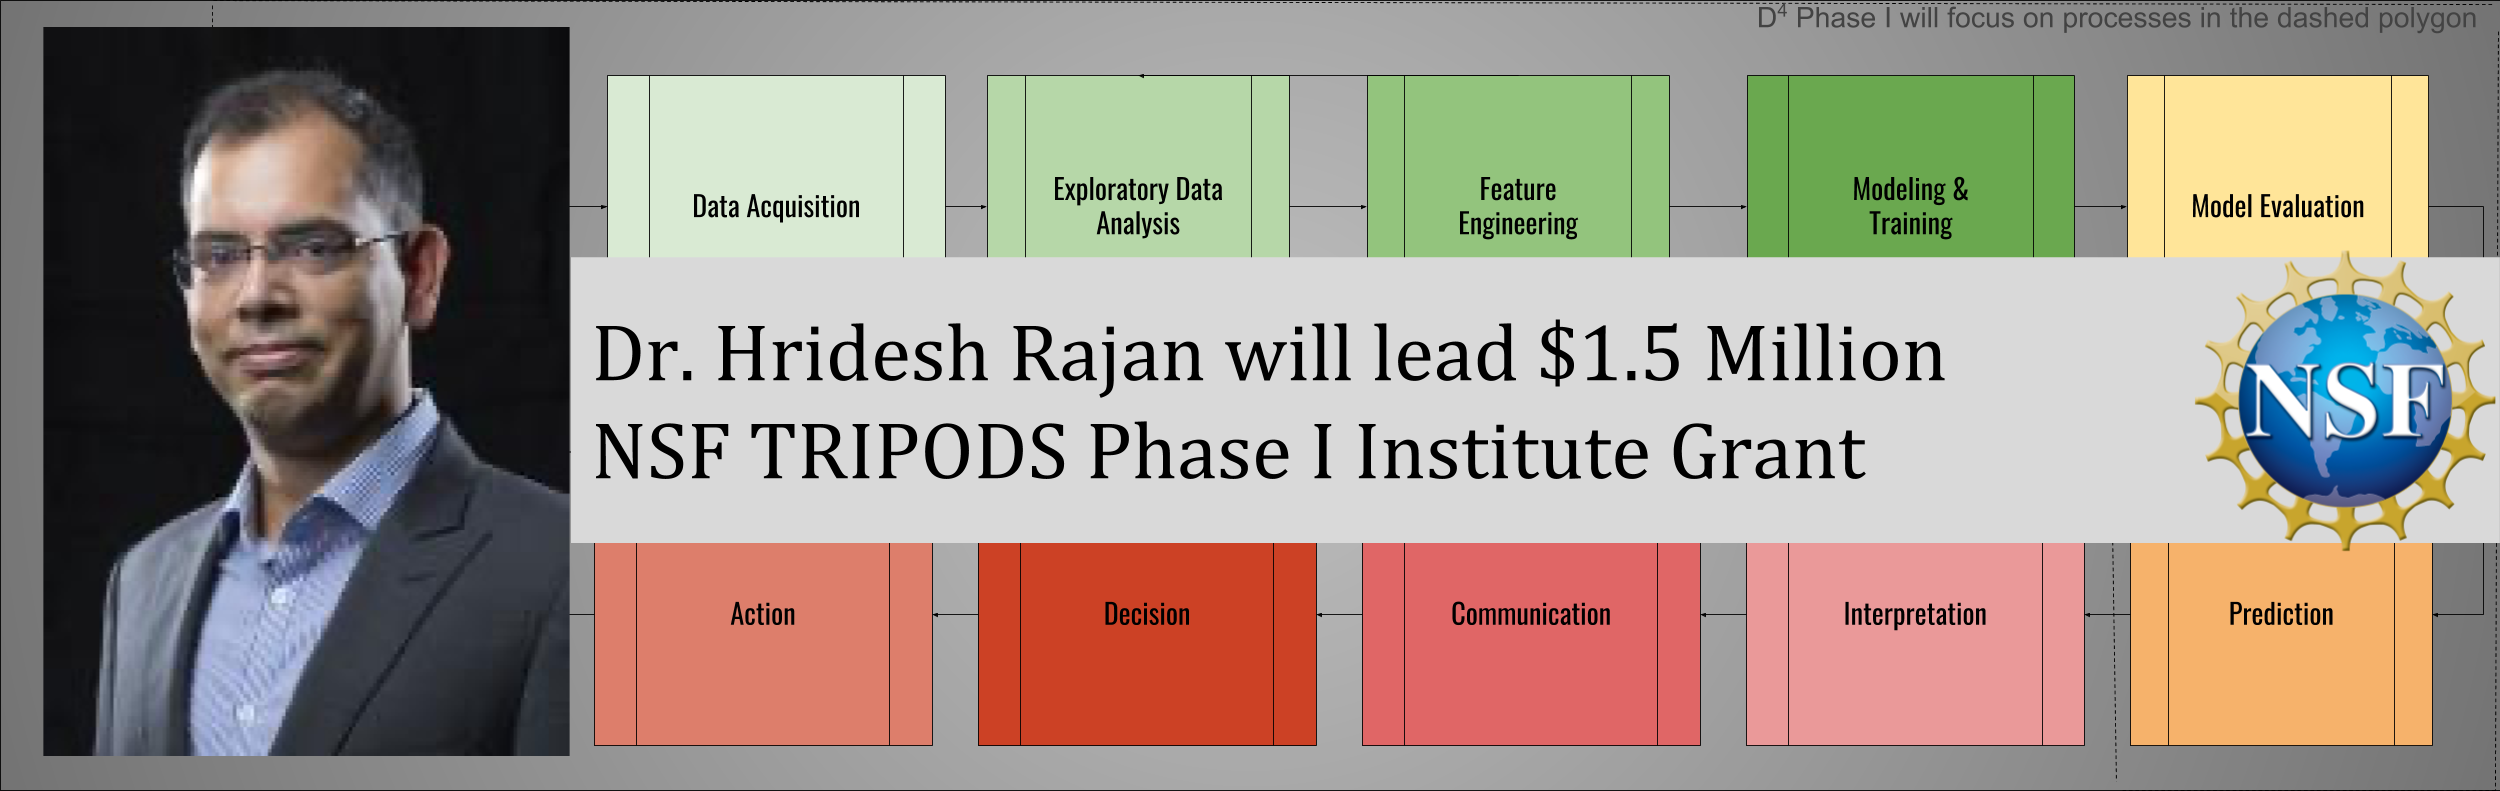 Dr. Hridesh Rajan will lead $1.5 Million NSF TRIPODS Phase I Institute Grant